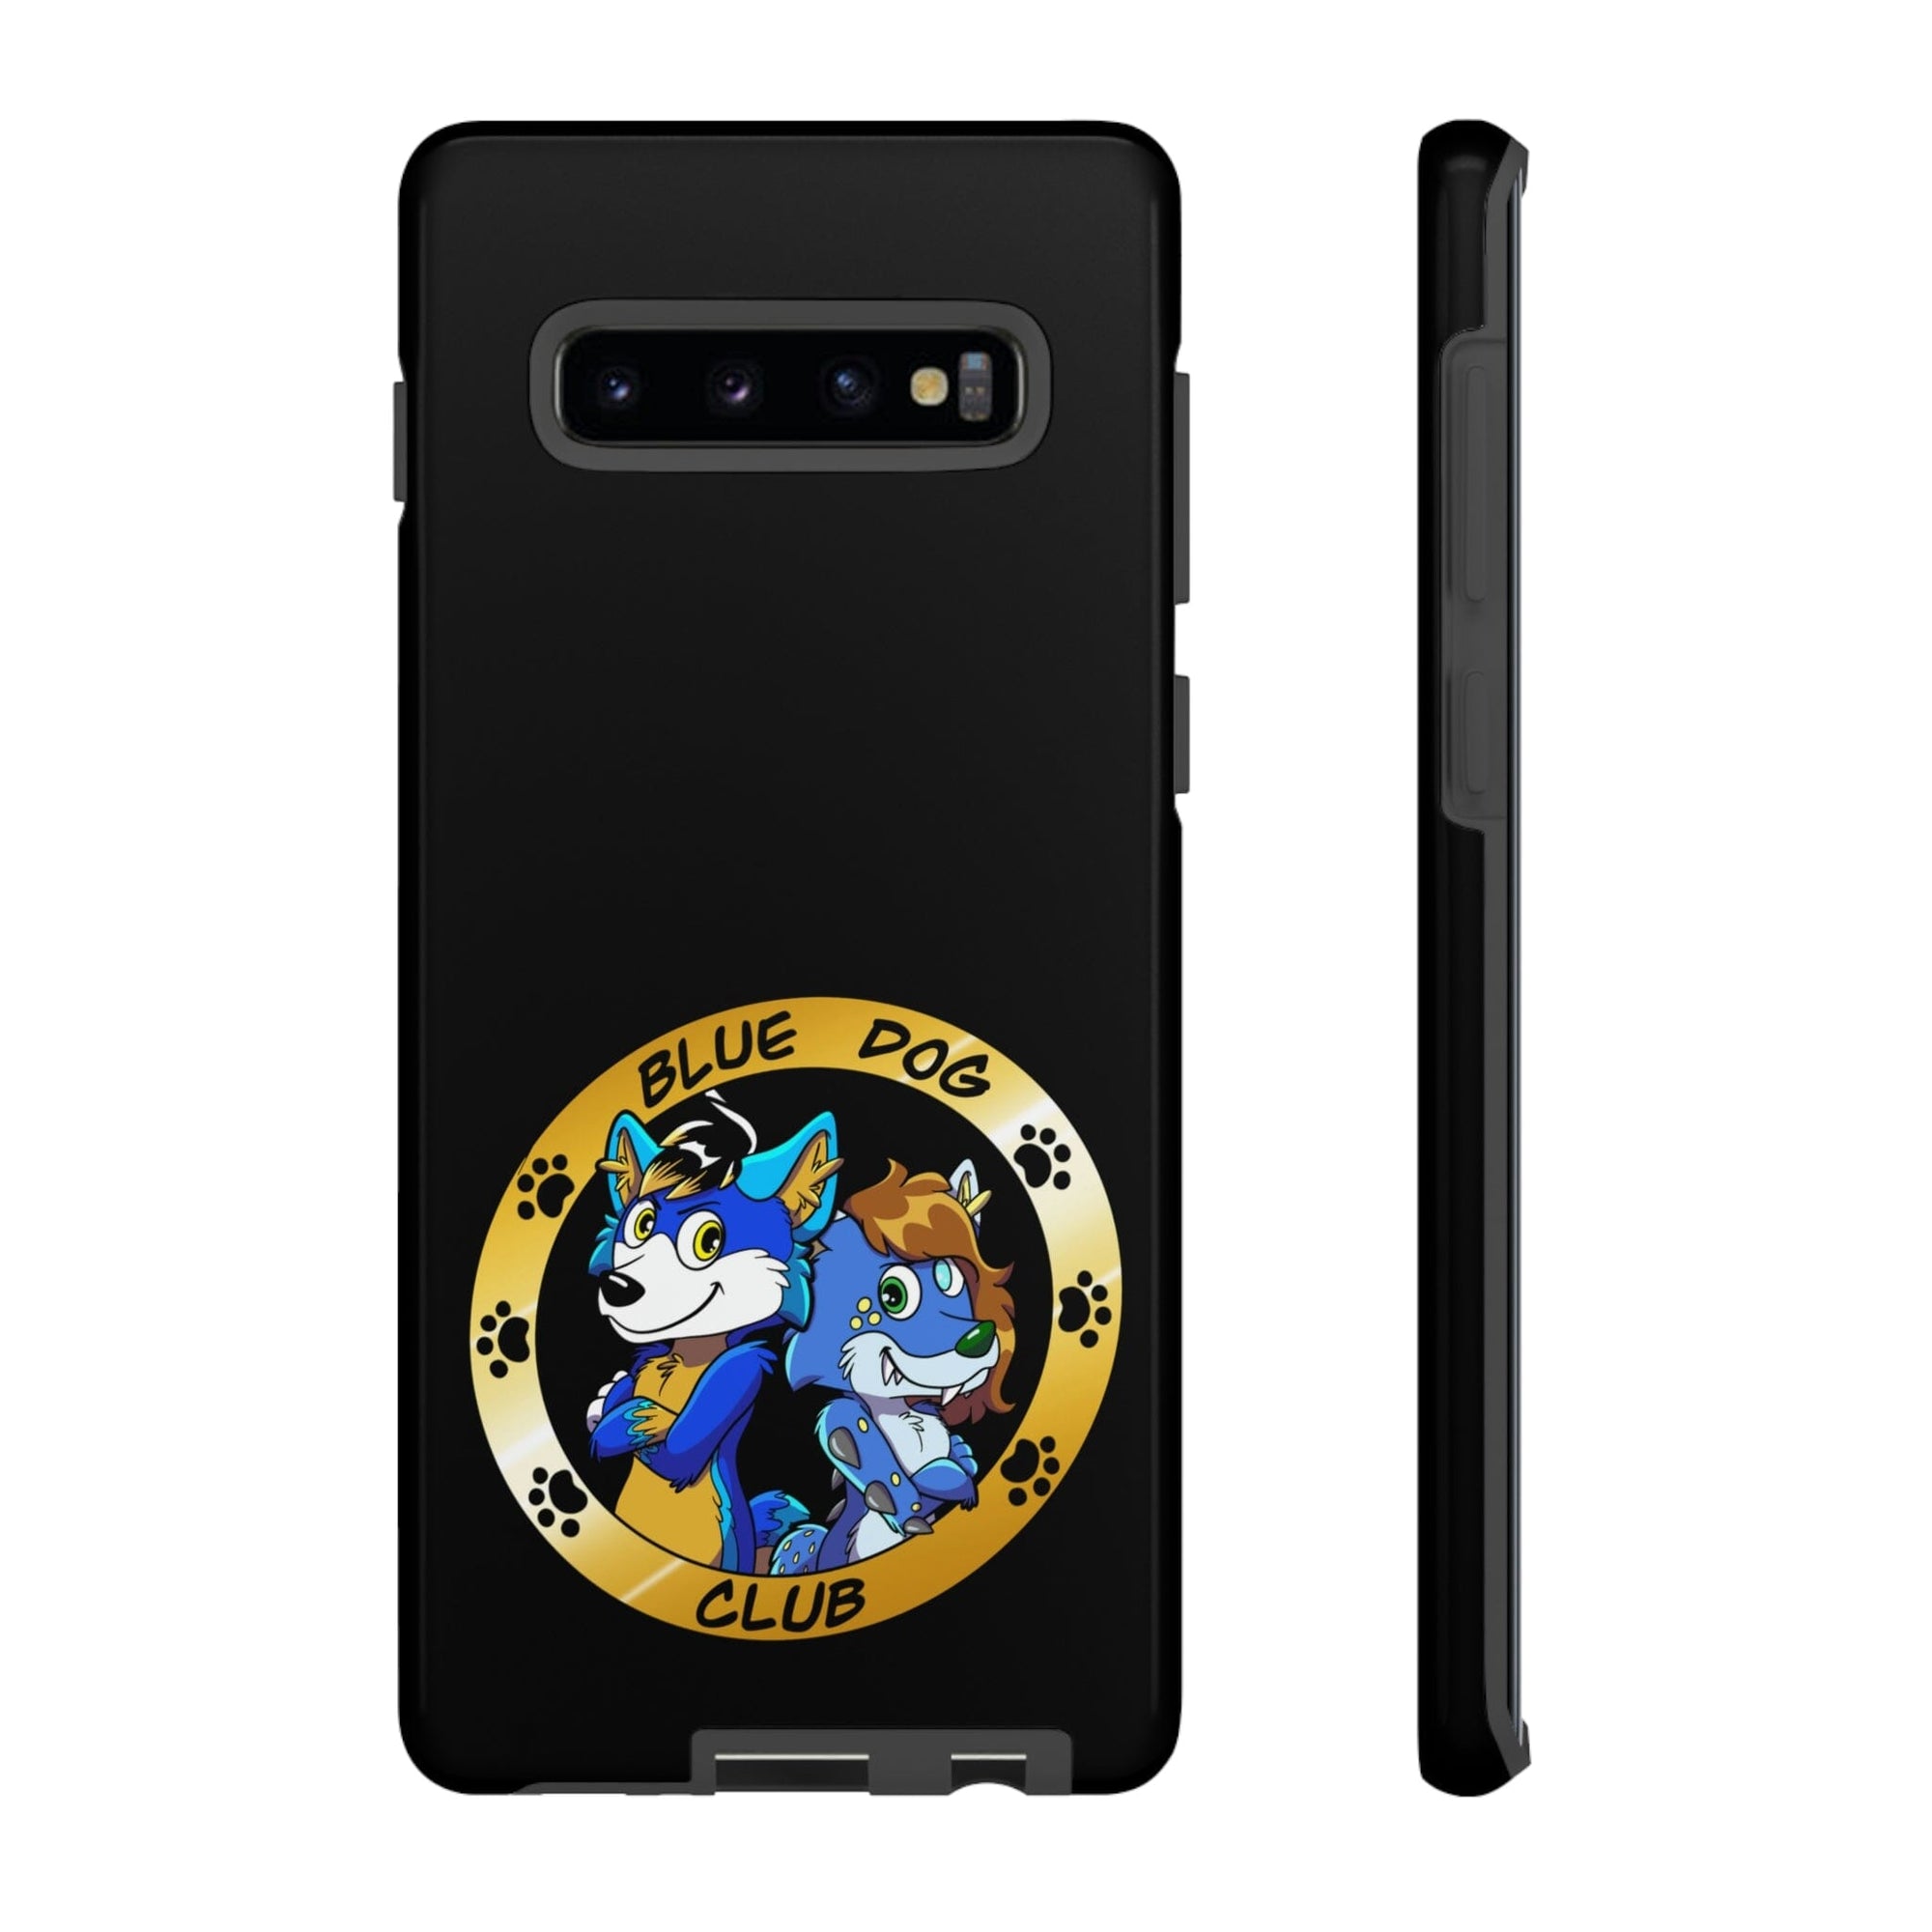 Hund The Hound - Blue Dog Club - Phone Case Phone Case Printify Samsung Galaxy S10 Plus Glossy 